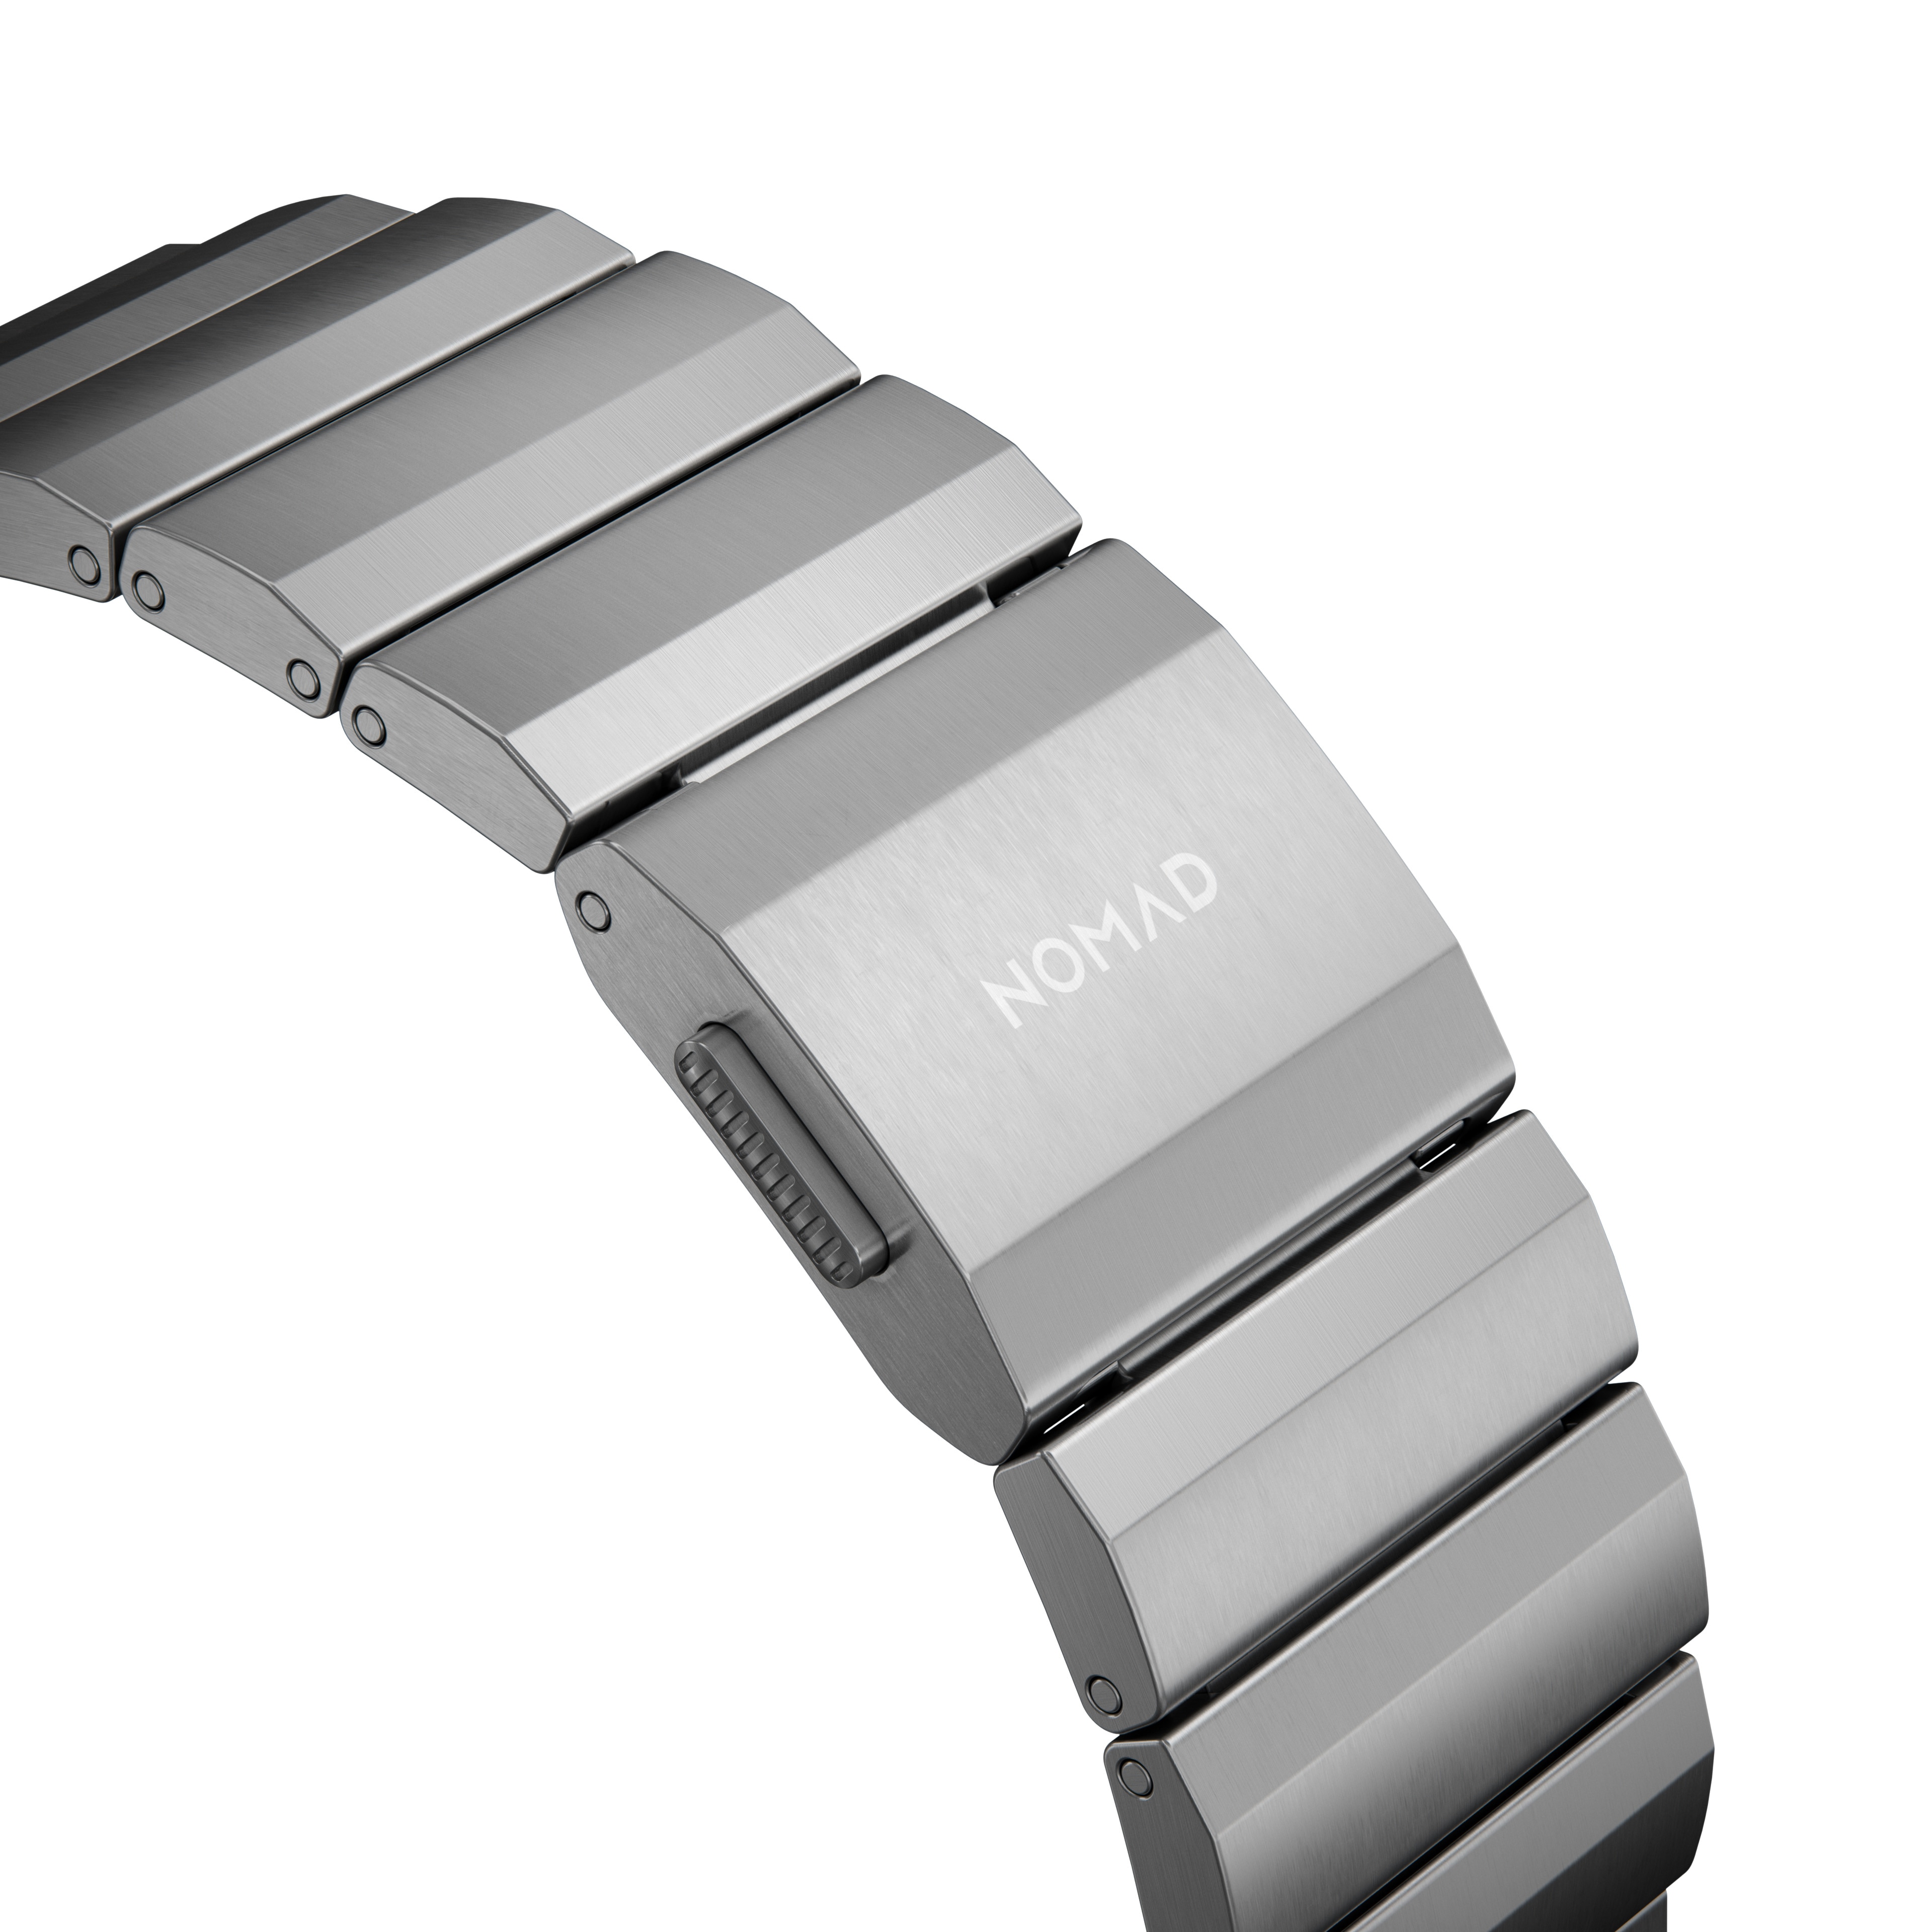 Titanium Band Apple Watch 44mm Silver